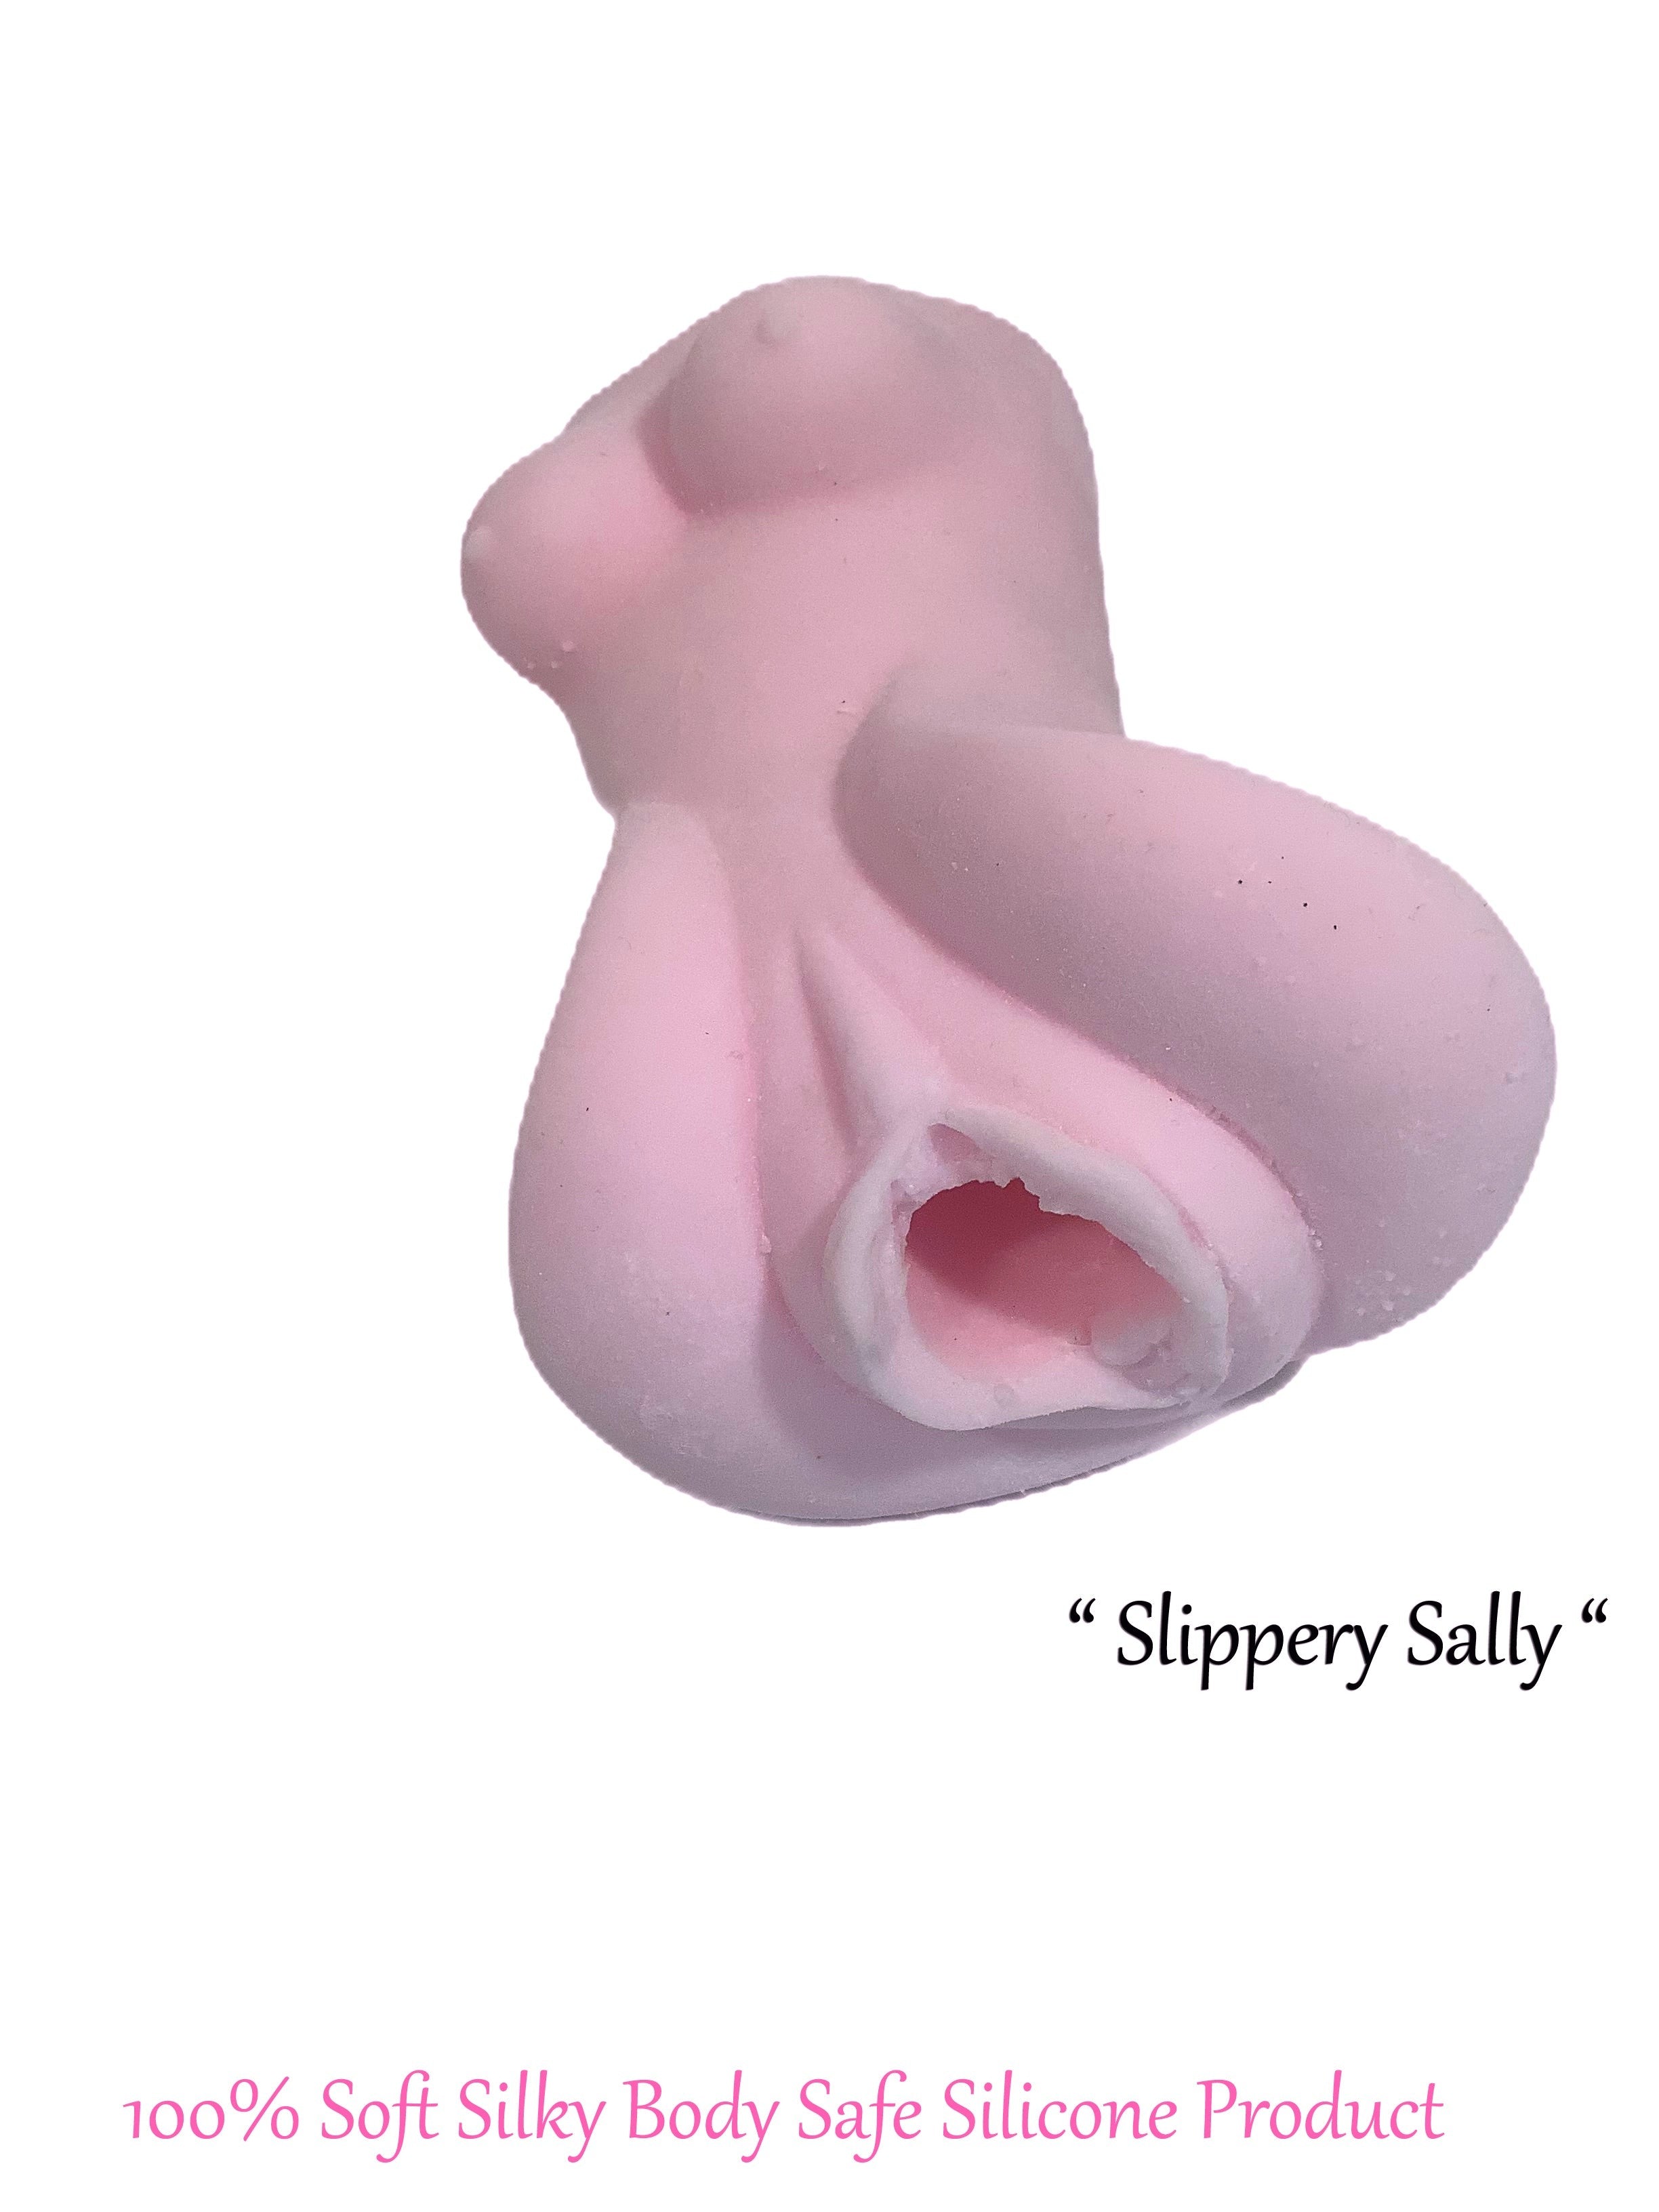 Silicone fake vagina Pussy for self pleasure image image